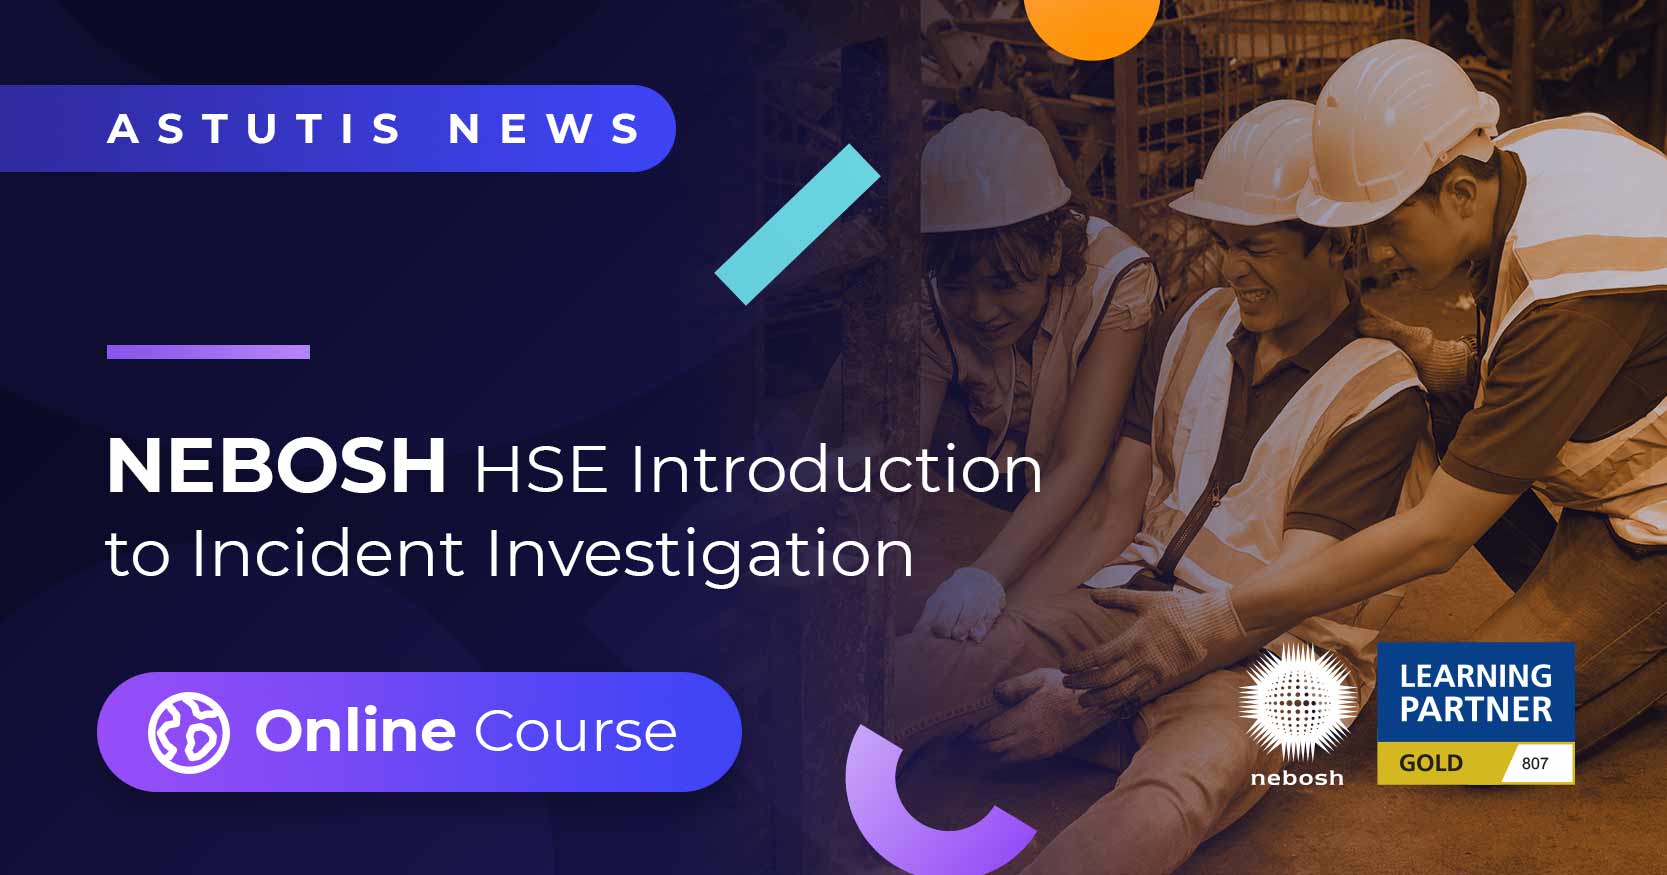 Astutis Introduce Online NEBOSH HSE Introduction to Incident Investigation Image